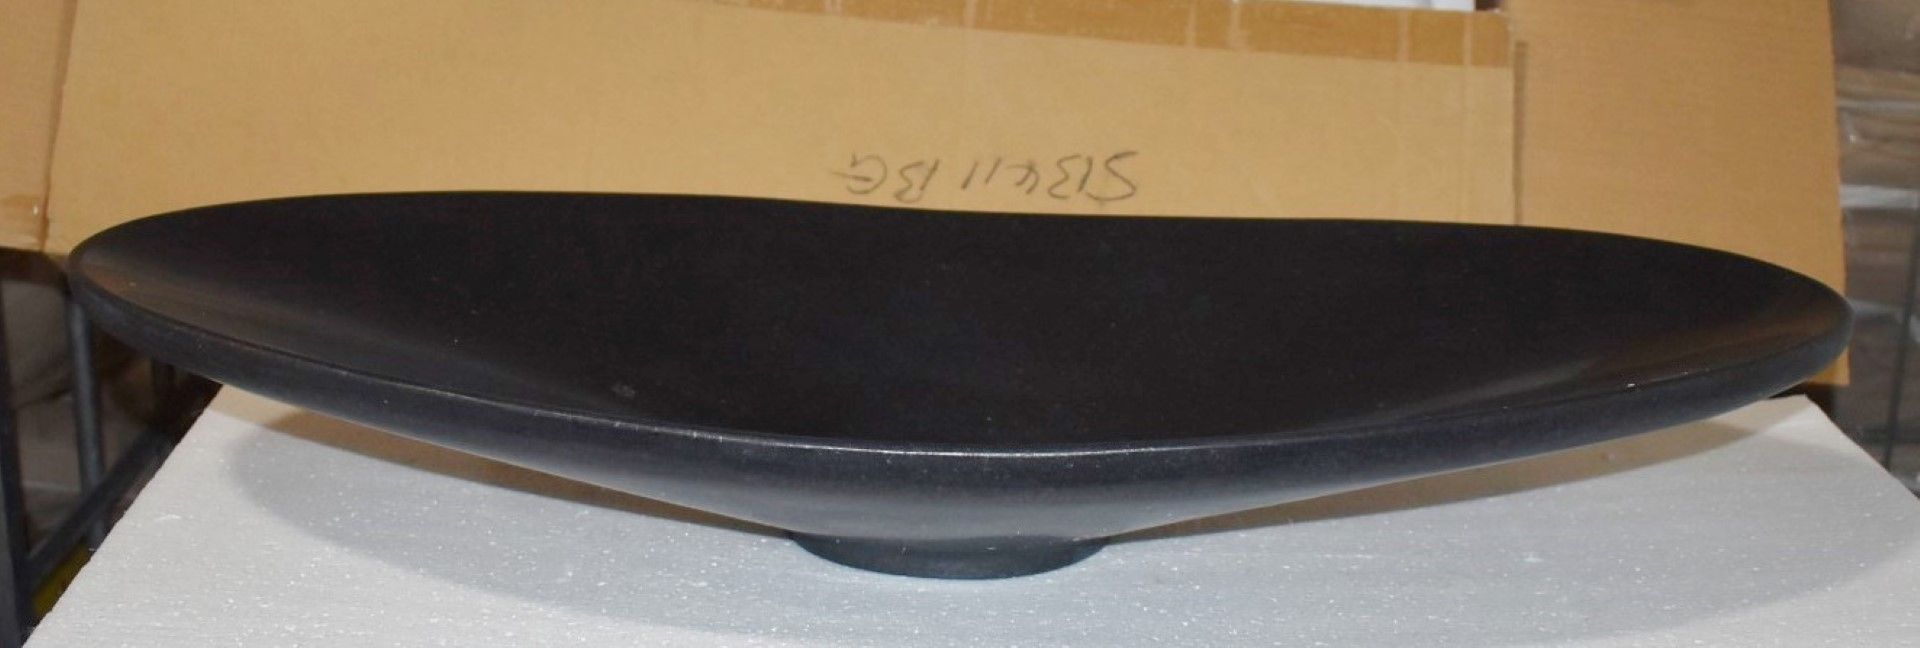 1 x Stonearth 'Cyra' Black Granite Stone Countertop Sink Basin - New Boxed Stock - RRP £620 - - Image 6 of 10